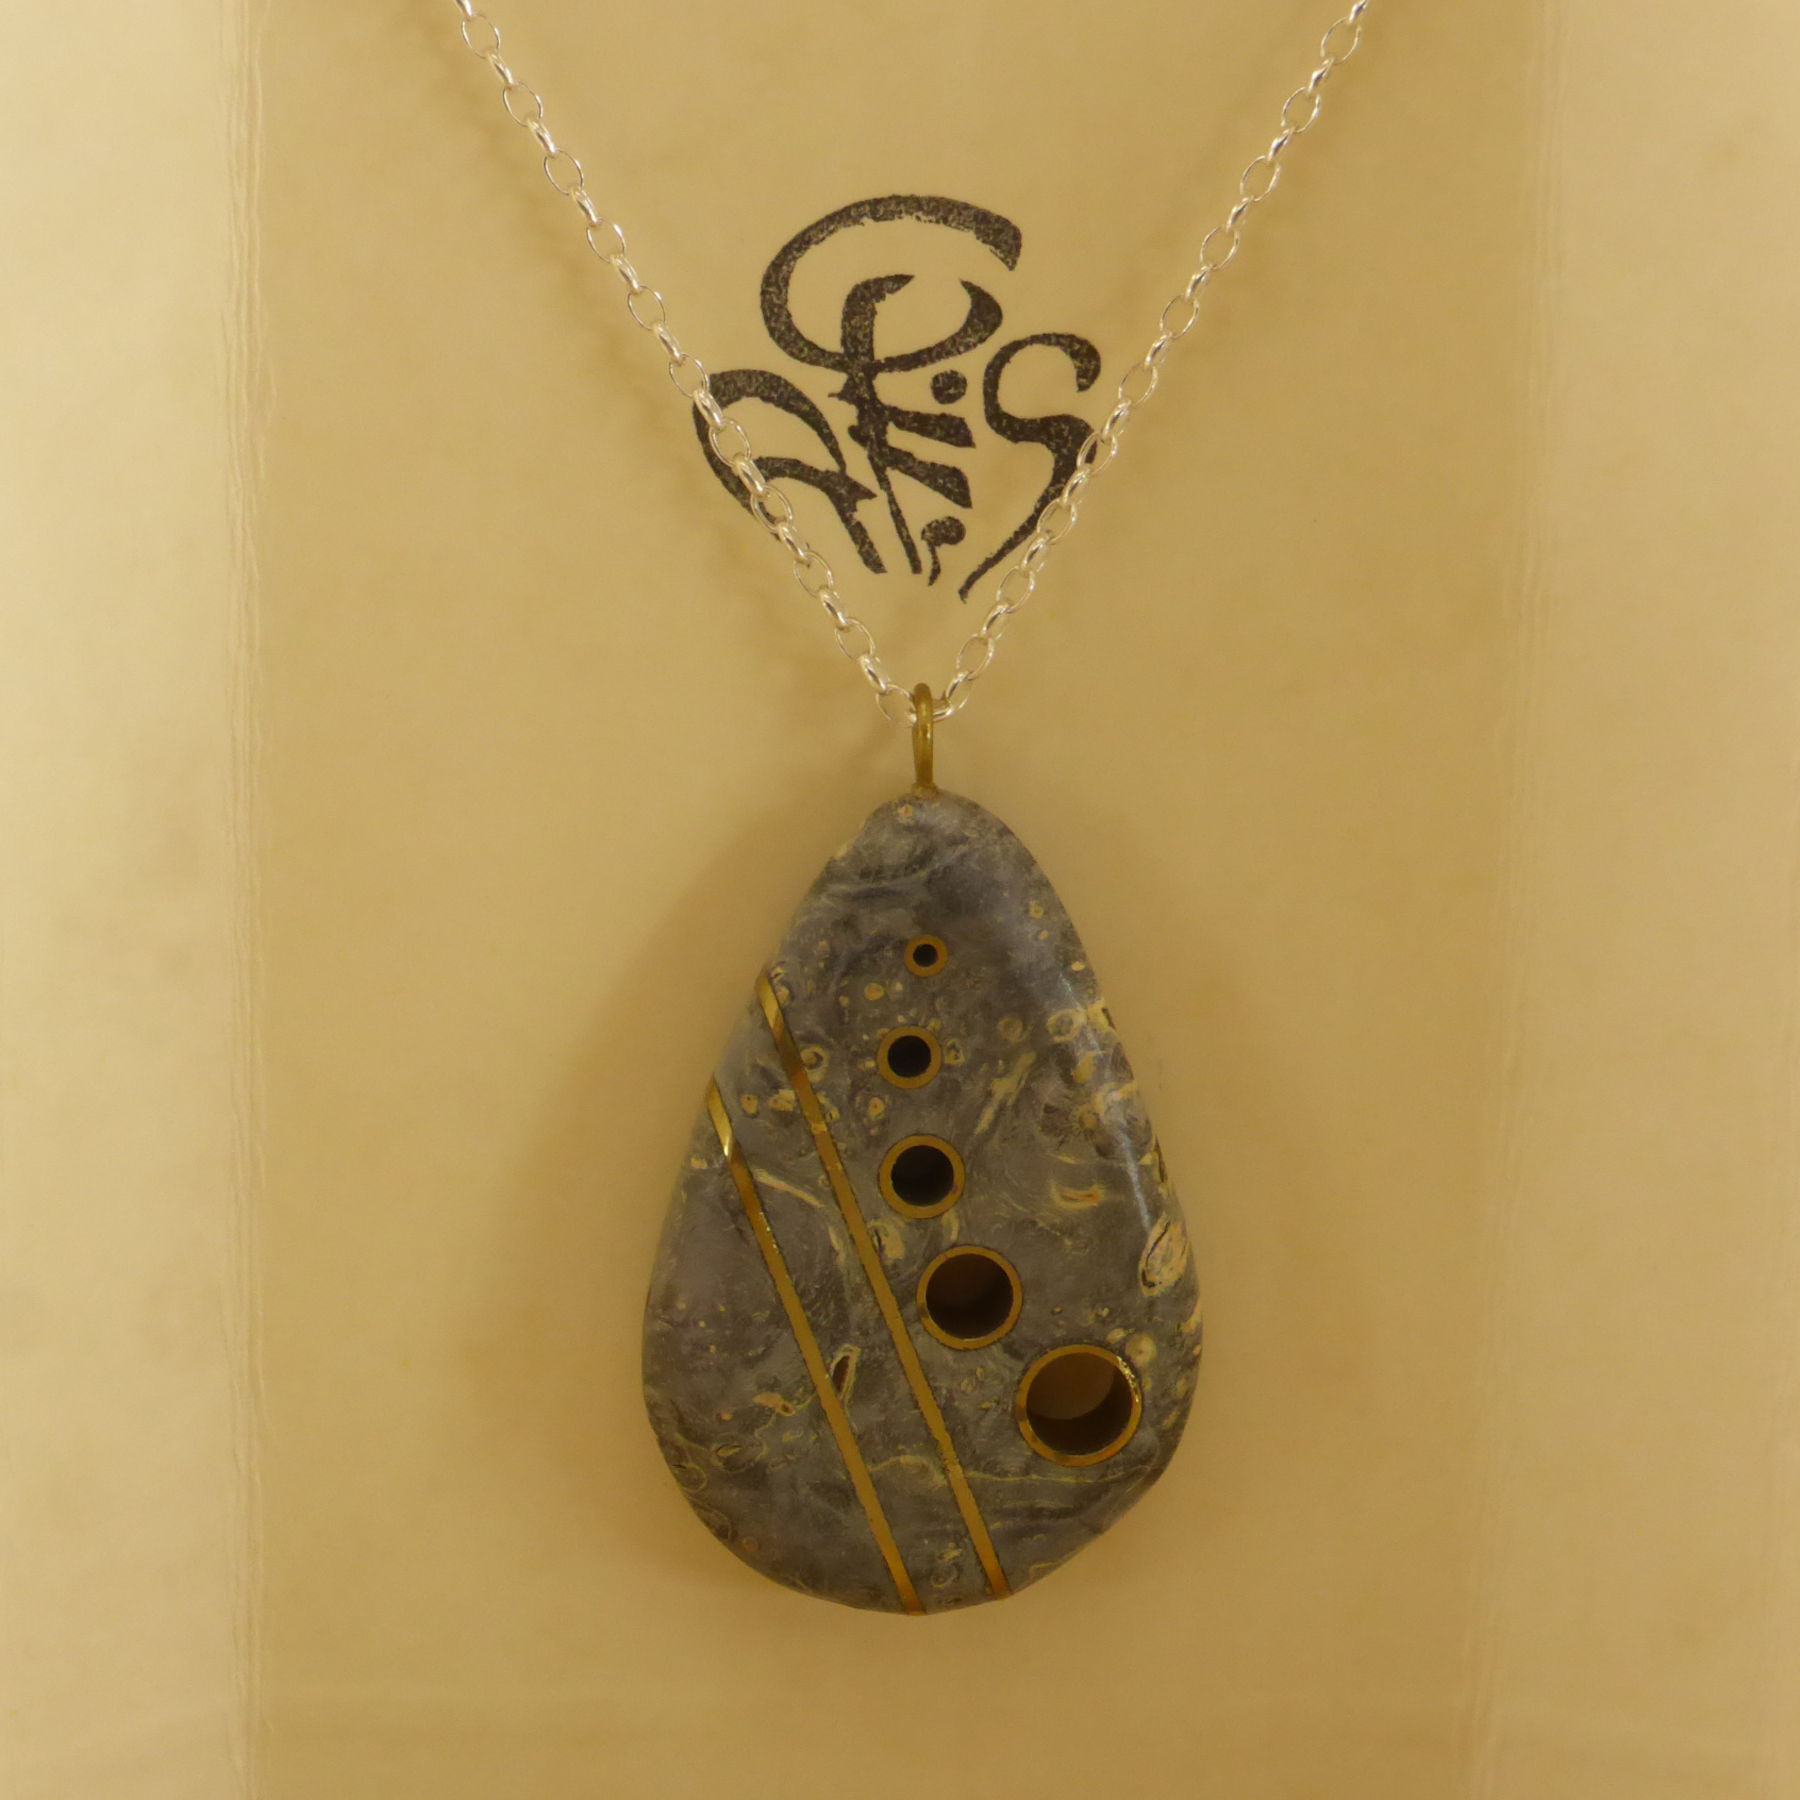 Black stabilized maple burl pendant with brass motifs